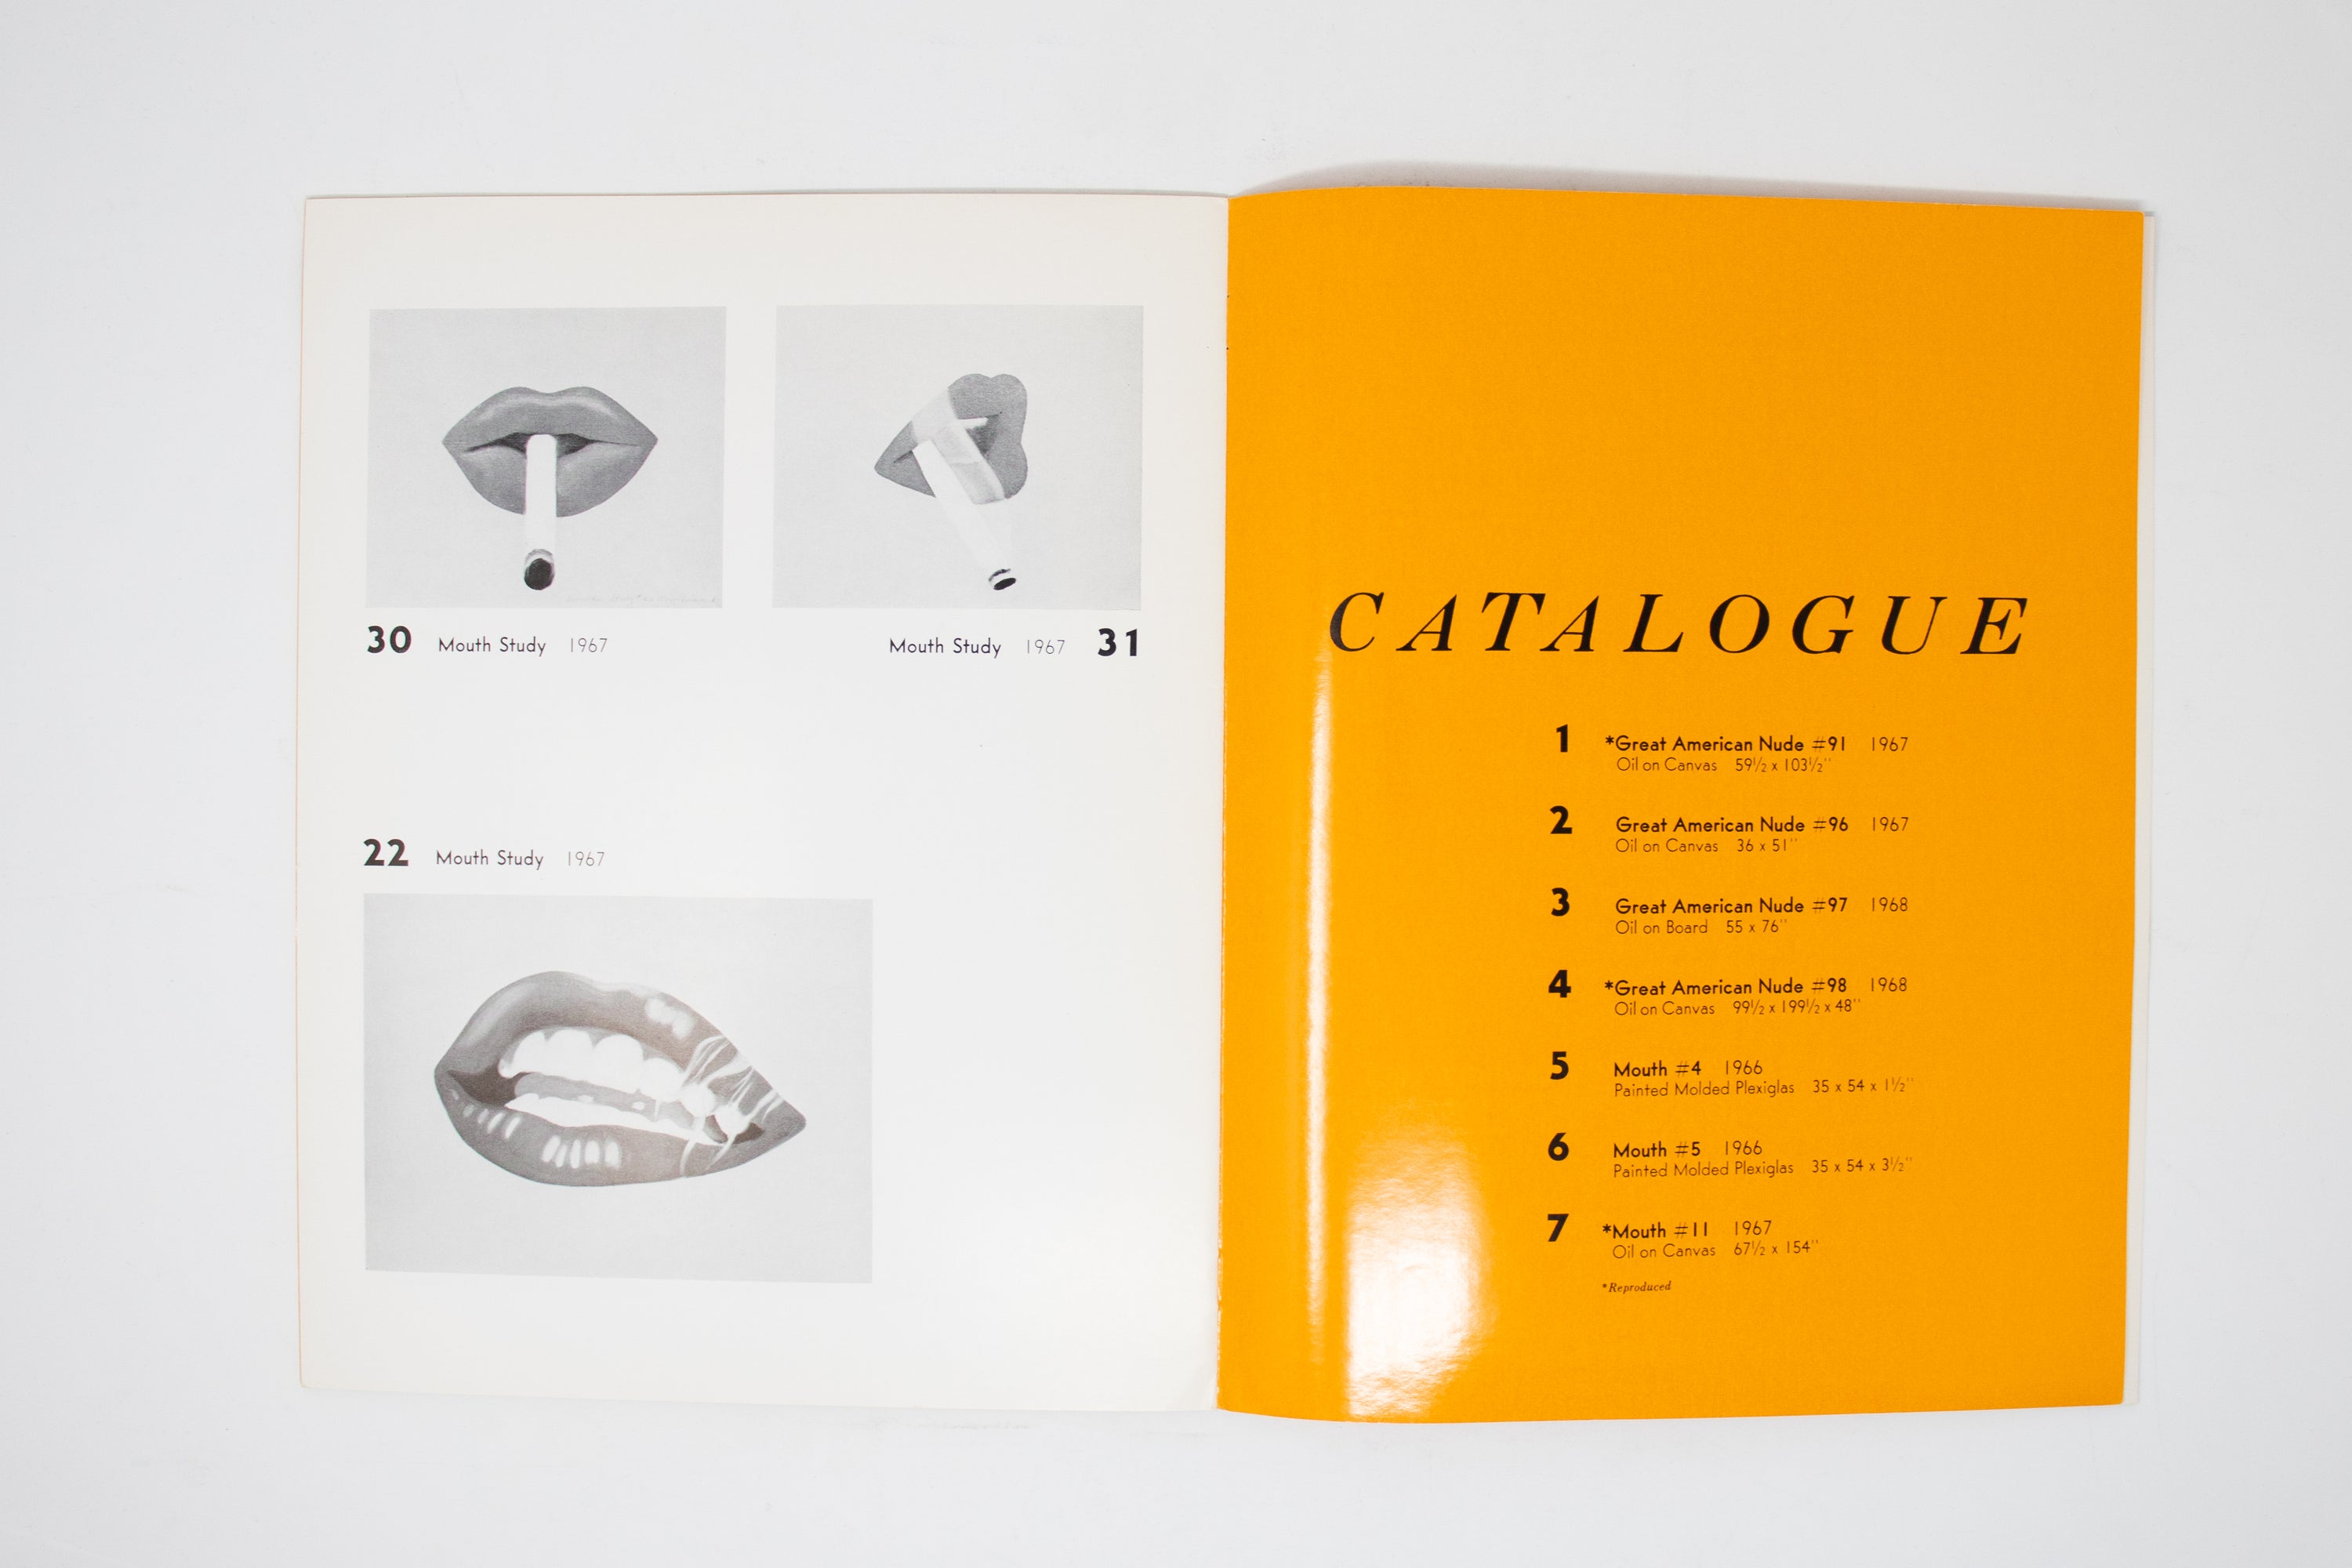 Exhibition Catalogue 1968